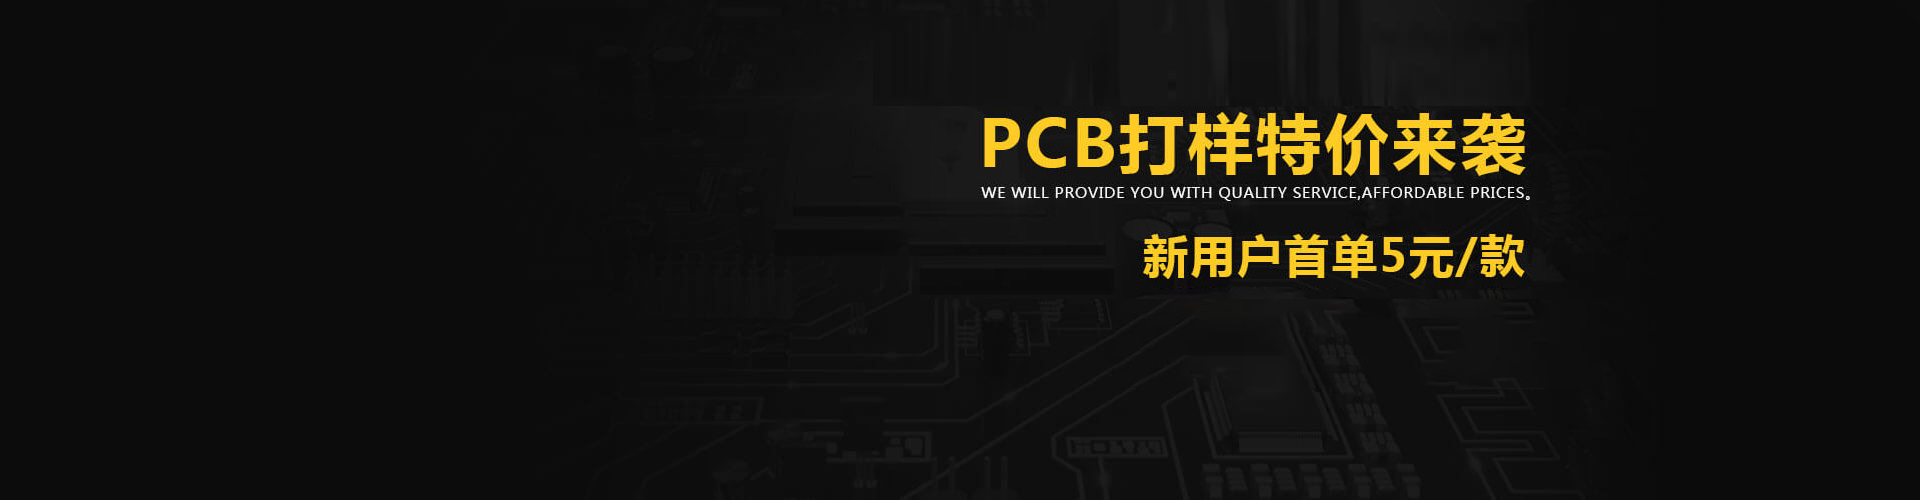 PCB,电路板,PCB打样,PCB厂家,线路板打样,电路板打样,PCB布线,PCB设计